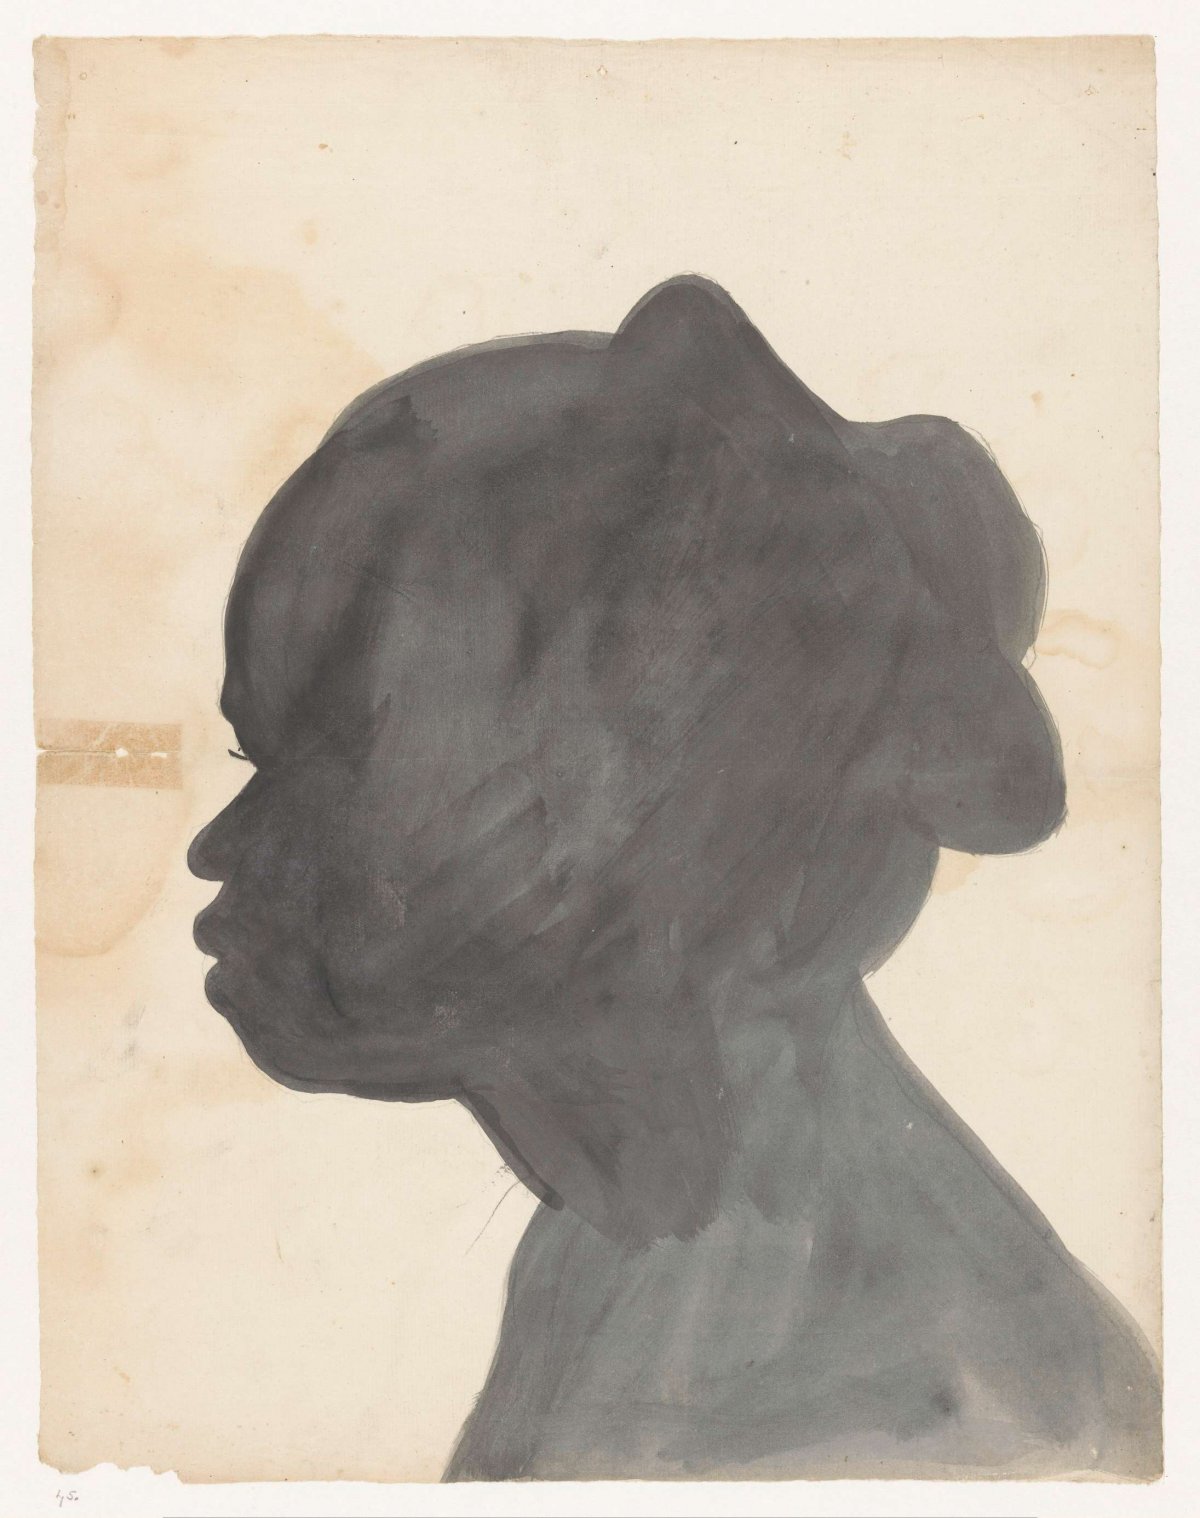 Silhouette portrait of Sara, Jan Brandes, 1783 - 1784